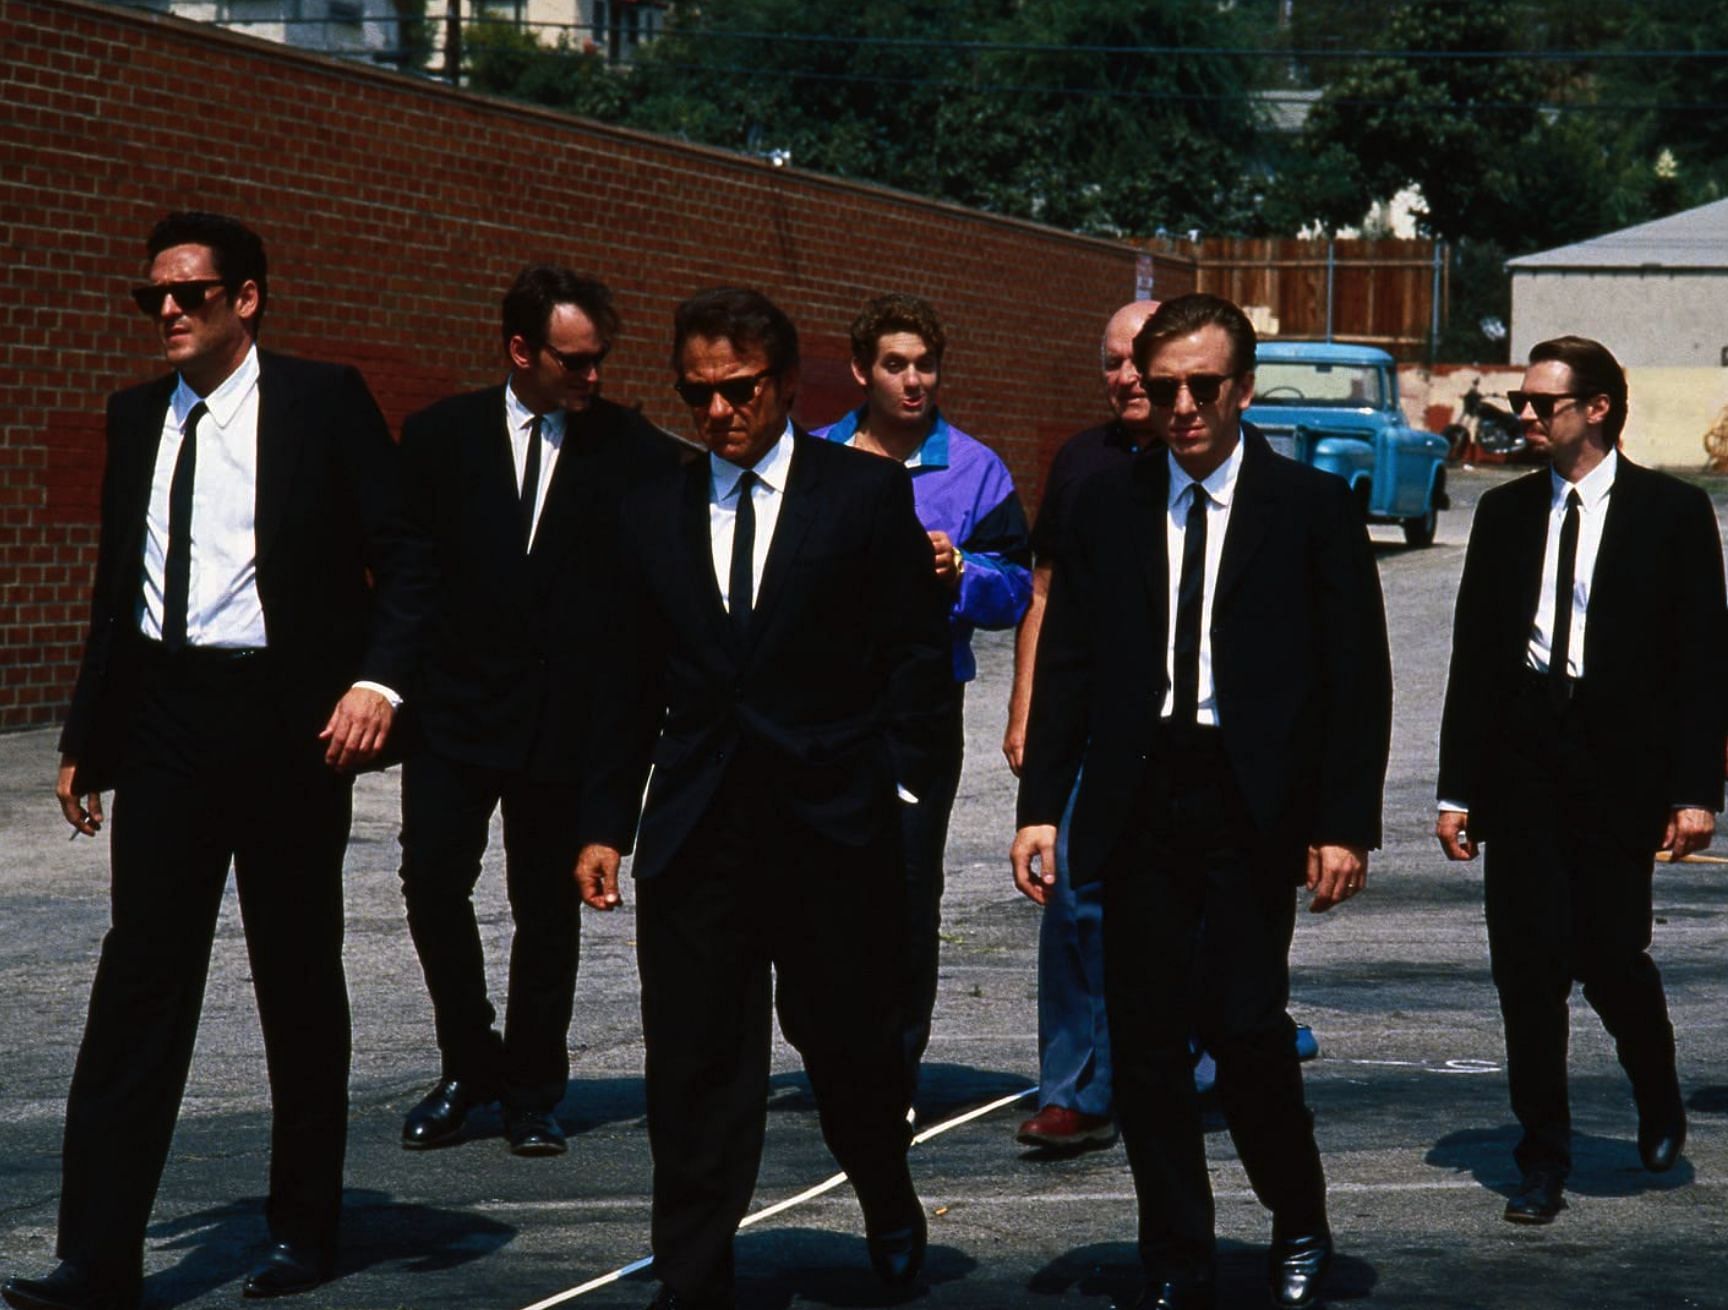 Quentin Tarantino in The Reservoir Dogs via IMDB.